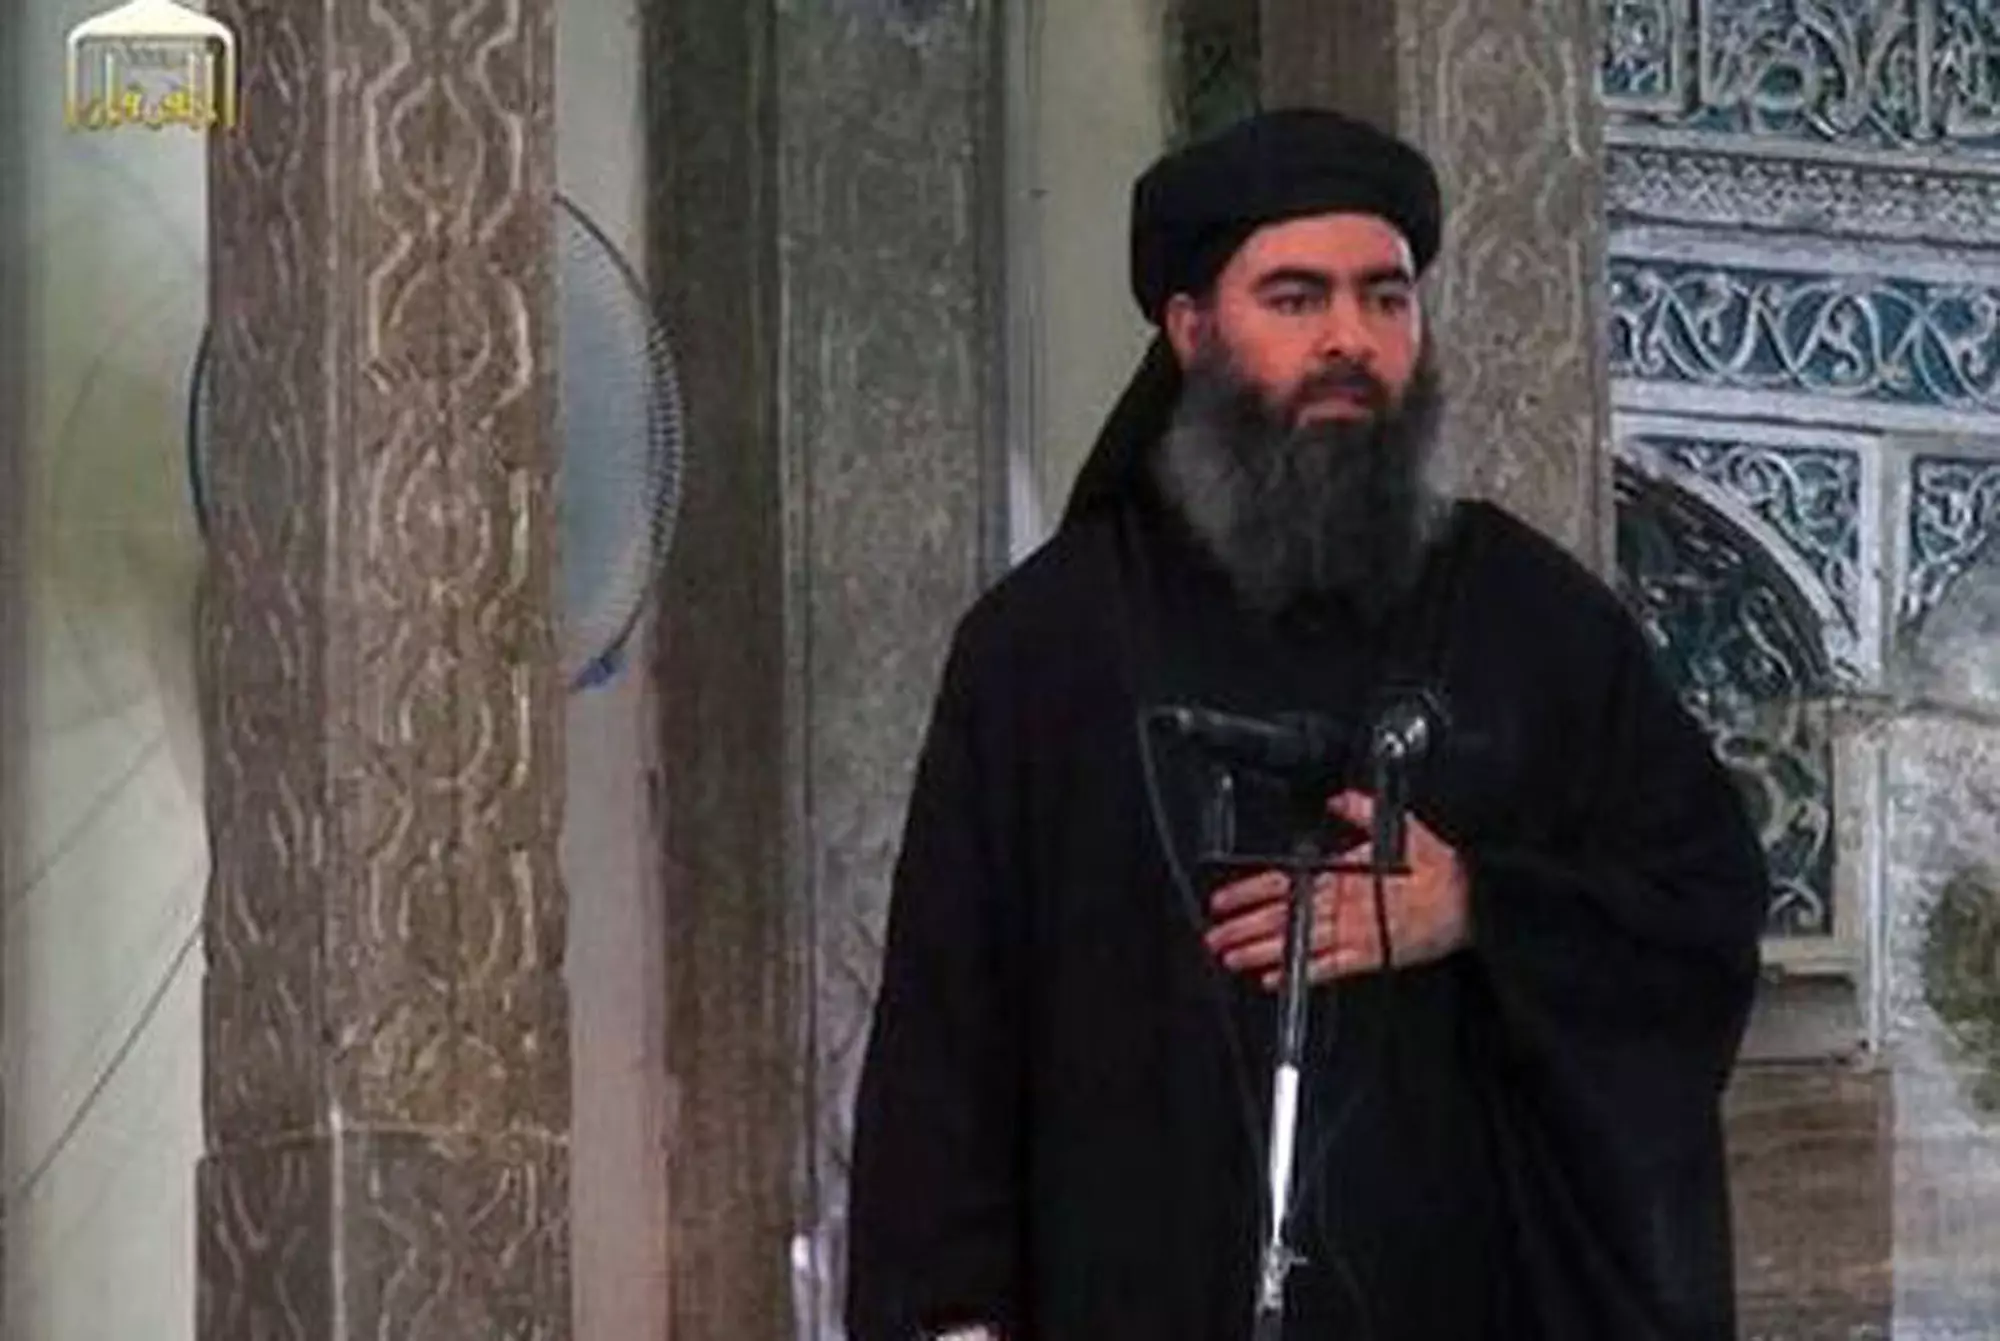 Conan helped bring down ISIS leader Abu Bakr al-Baghdadi.